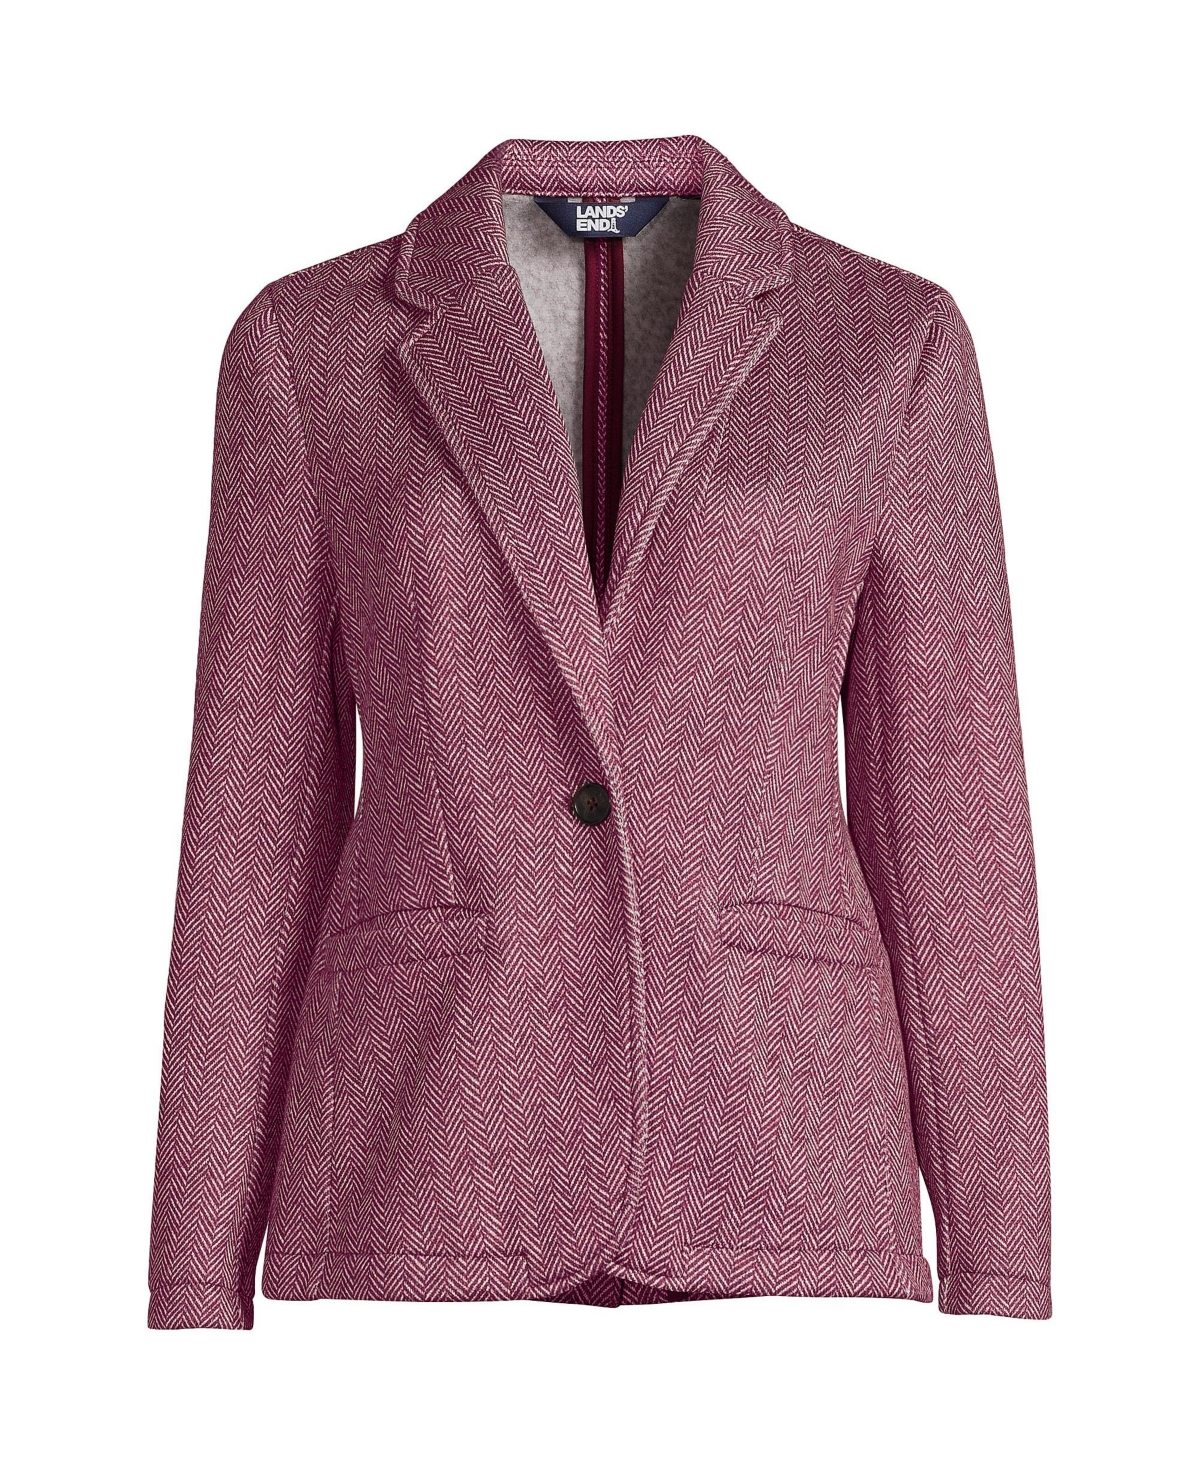 Women's Sweater Fleece Blazer Jacket - The Blazer - Rich burgundy herringbone